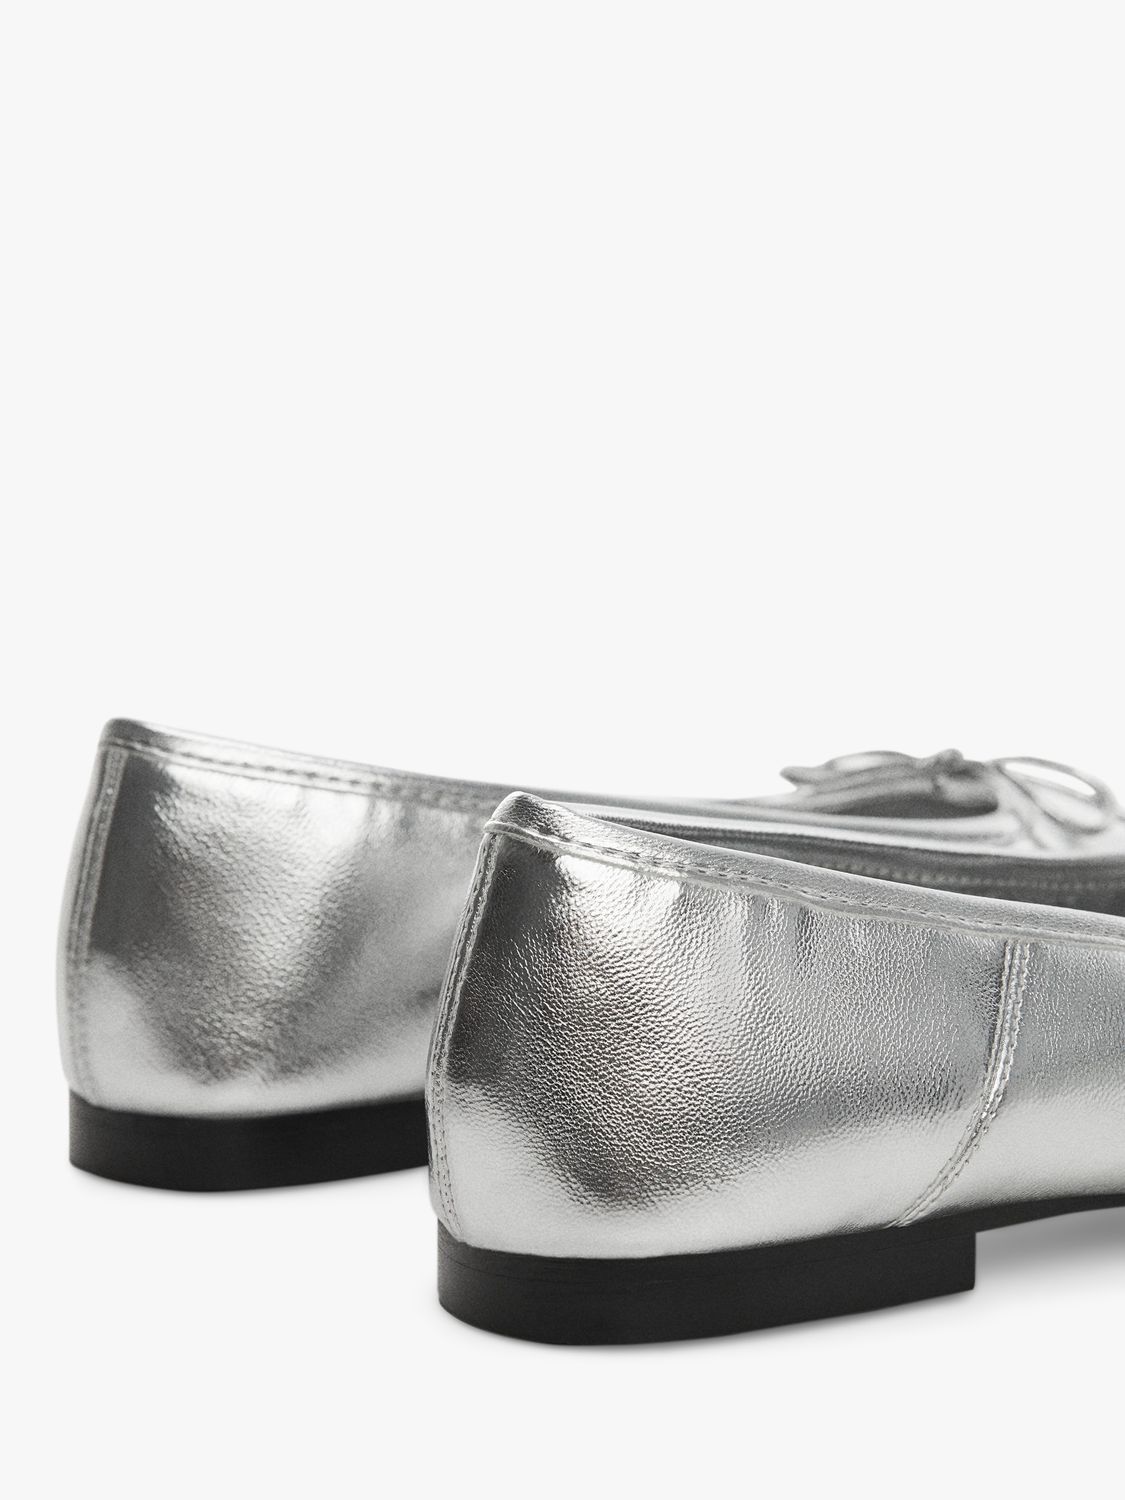 Mango Blaze Metallic Ballerina Pumps, Silver at John Lewis & Partners